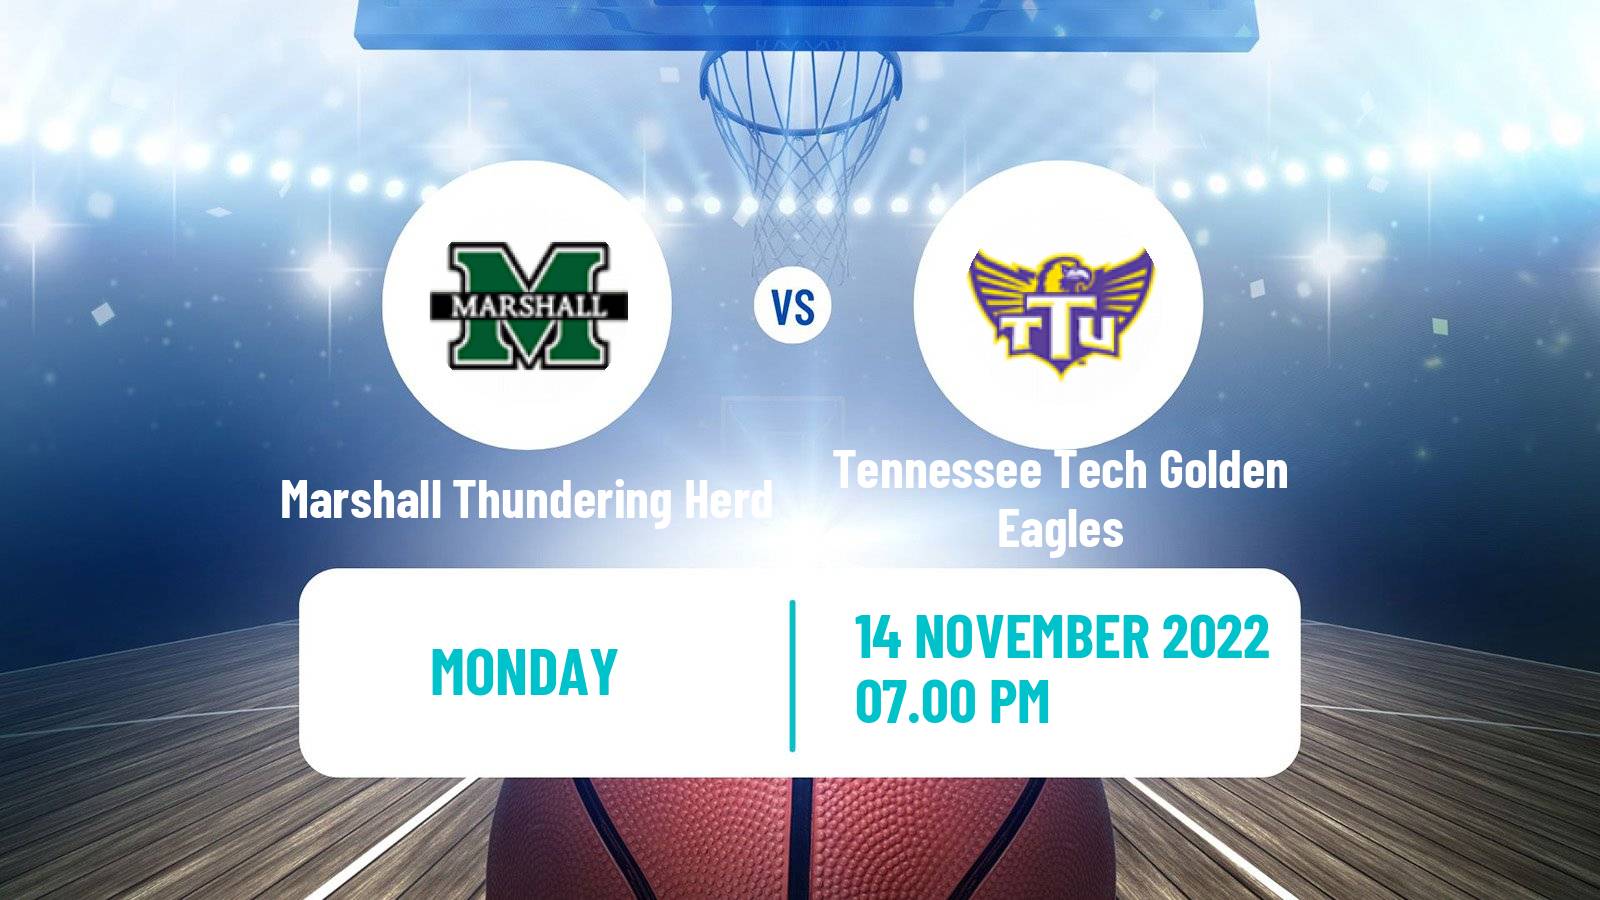 Basketball NCAA College Basketball Marshall Thundering Herd - Tennessee Tech Golden Eagles